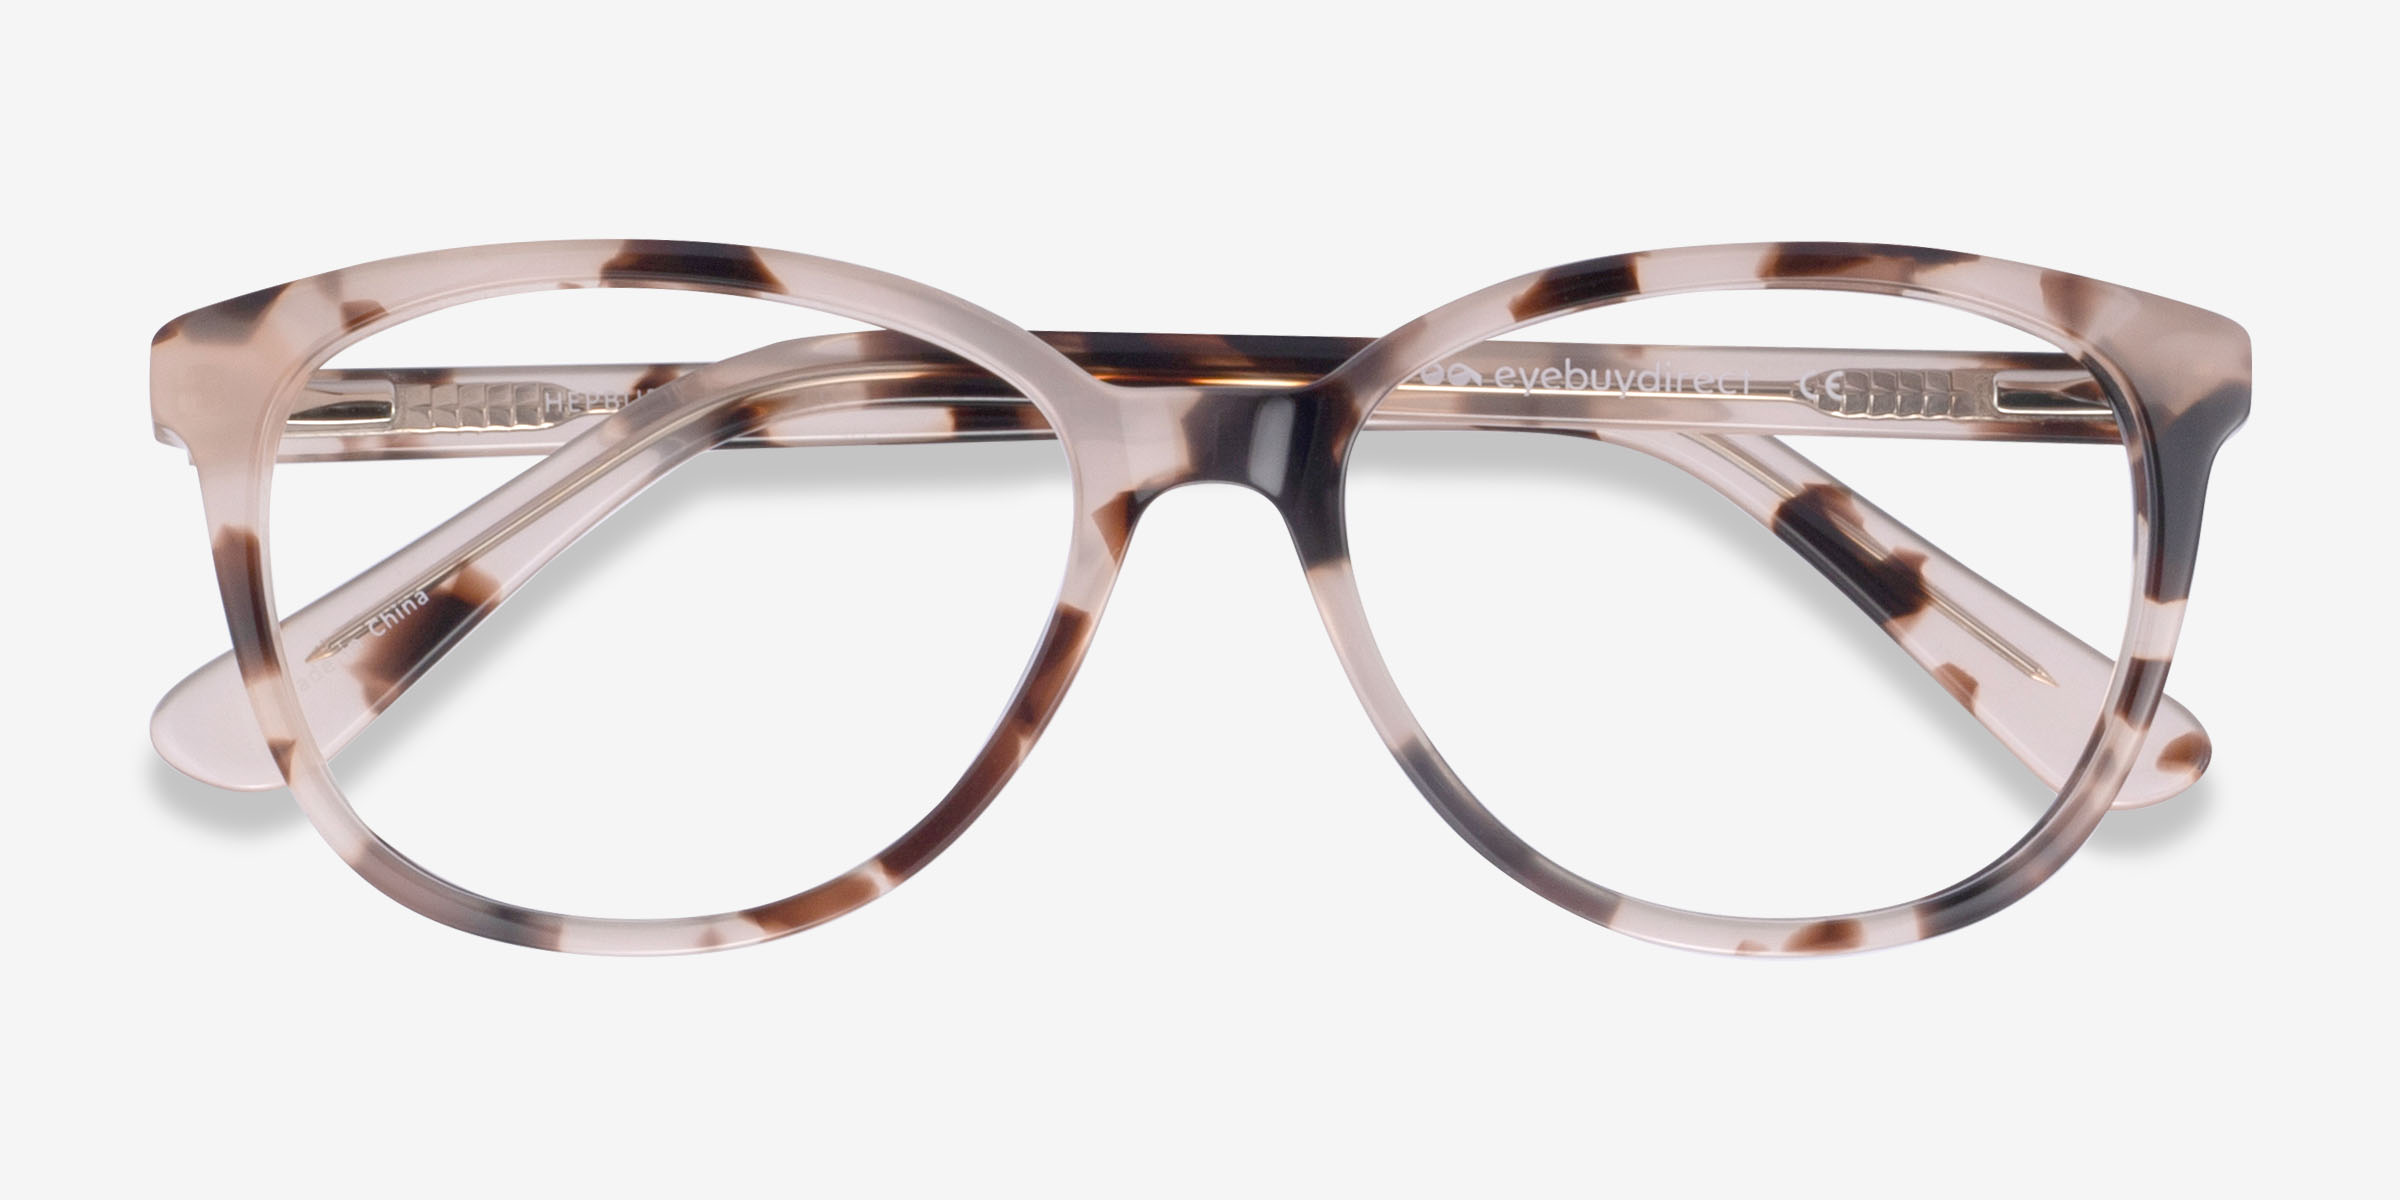 Hepburn - Iconic Frames in Exotic Pattern | EyeBuyDirect